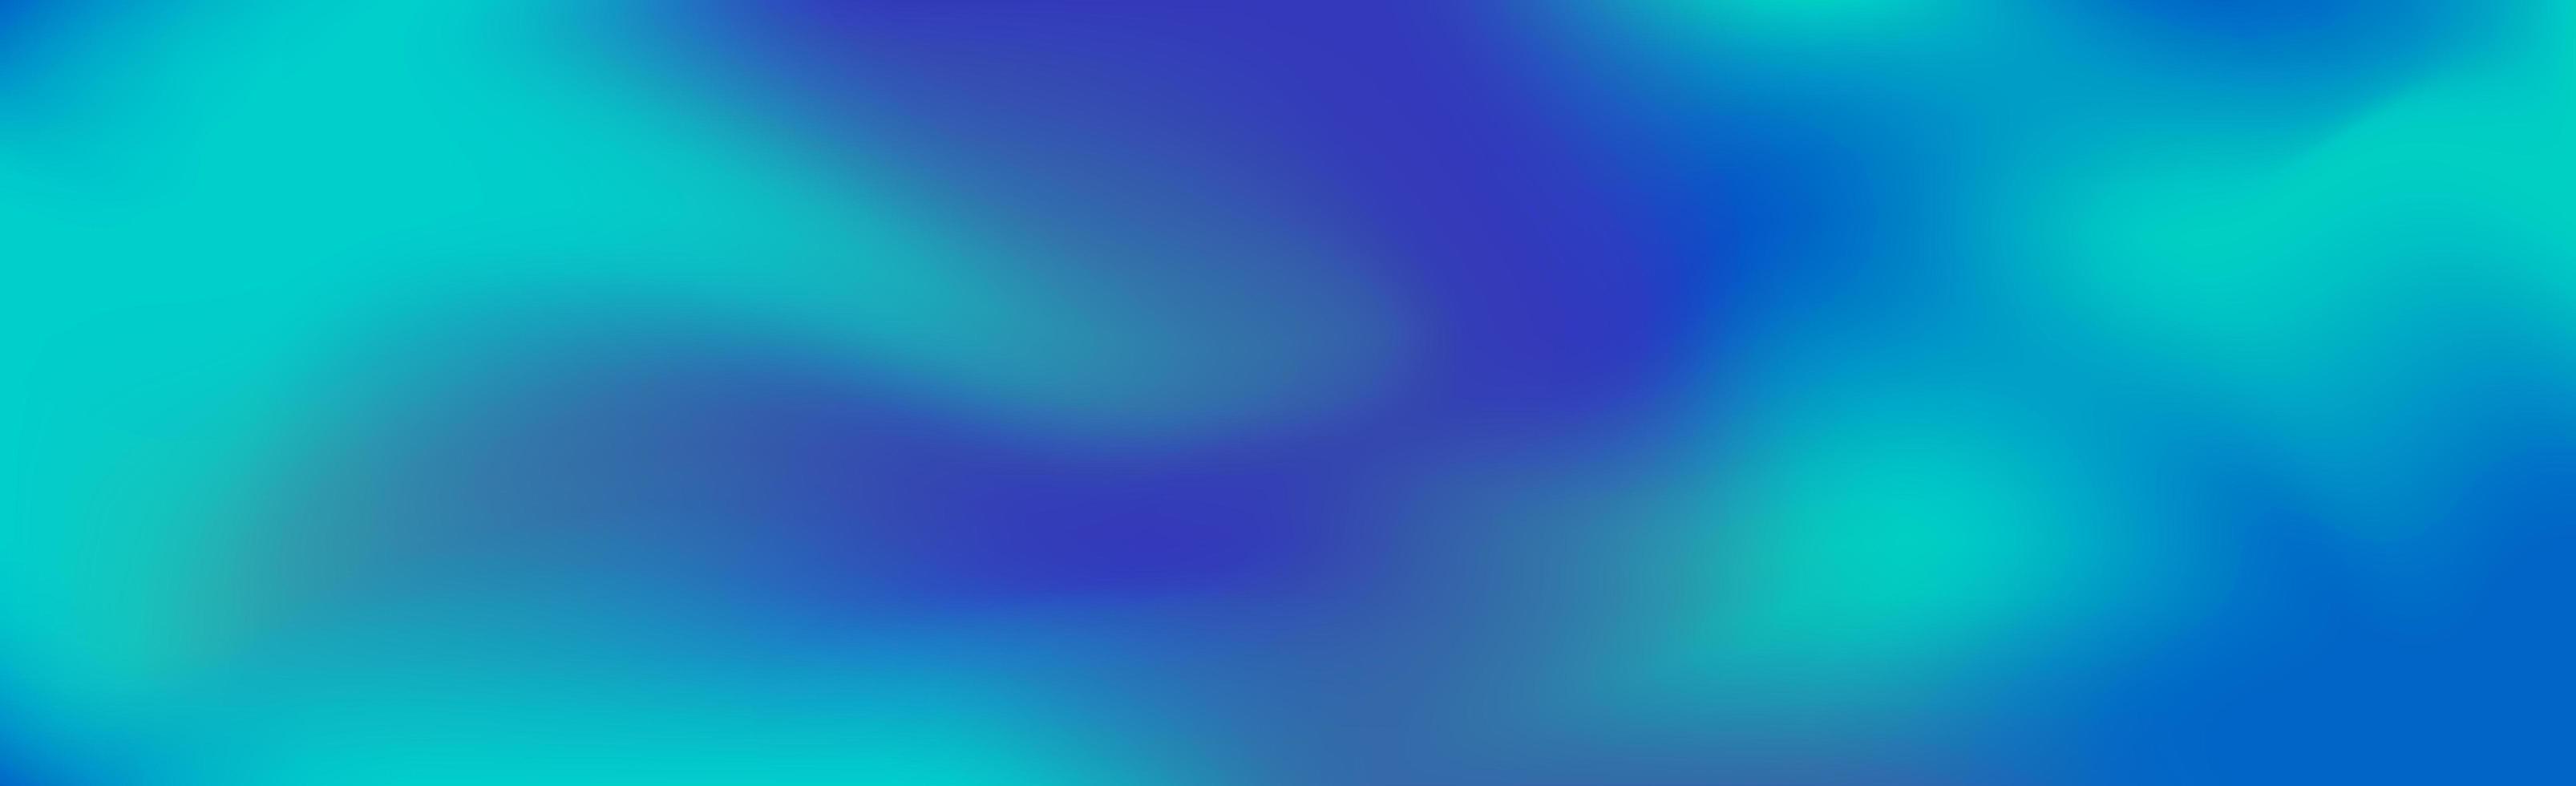 fundo panorâmico abstrato gradiente azul escuro - vetor